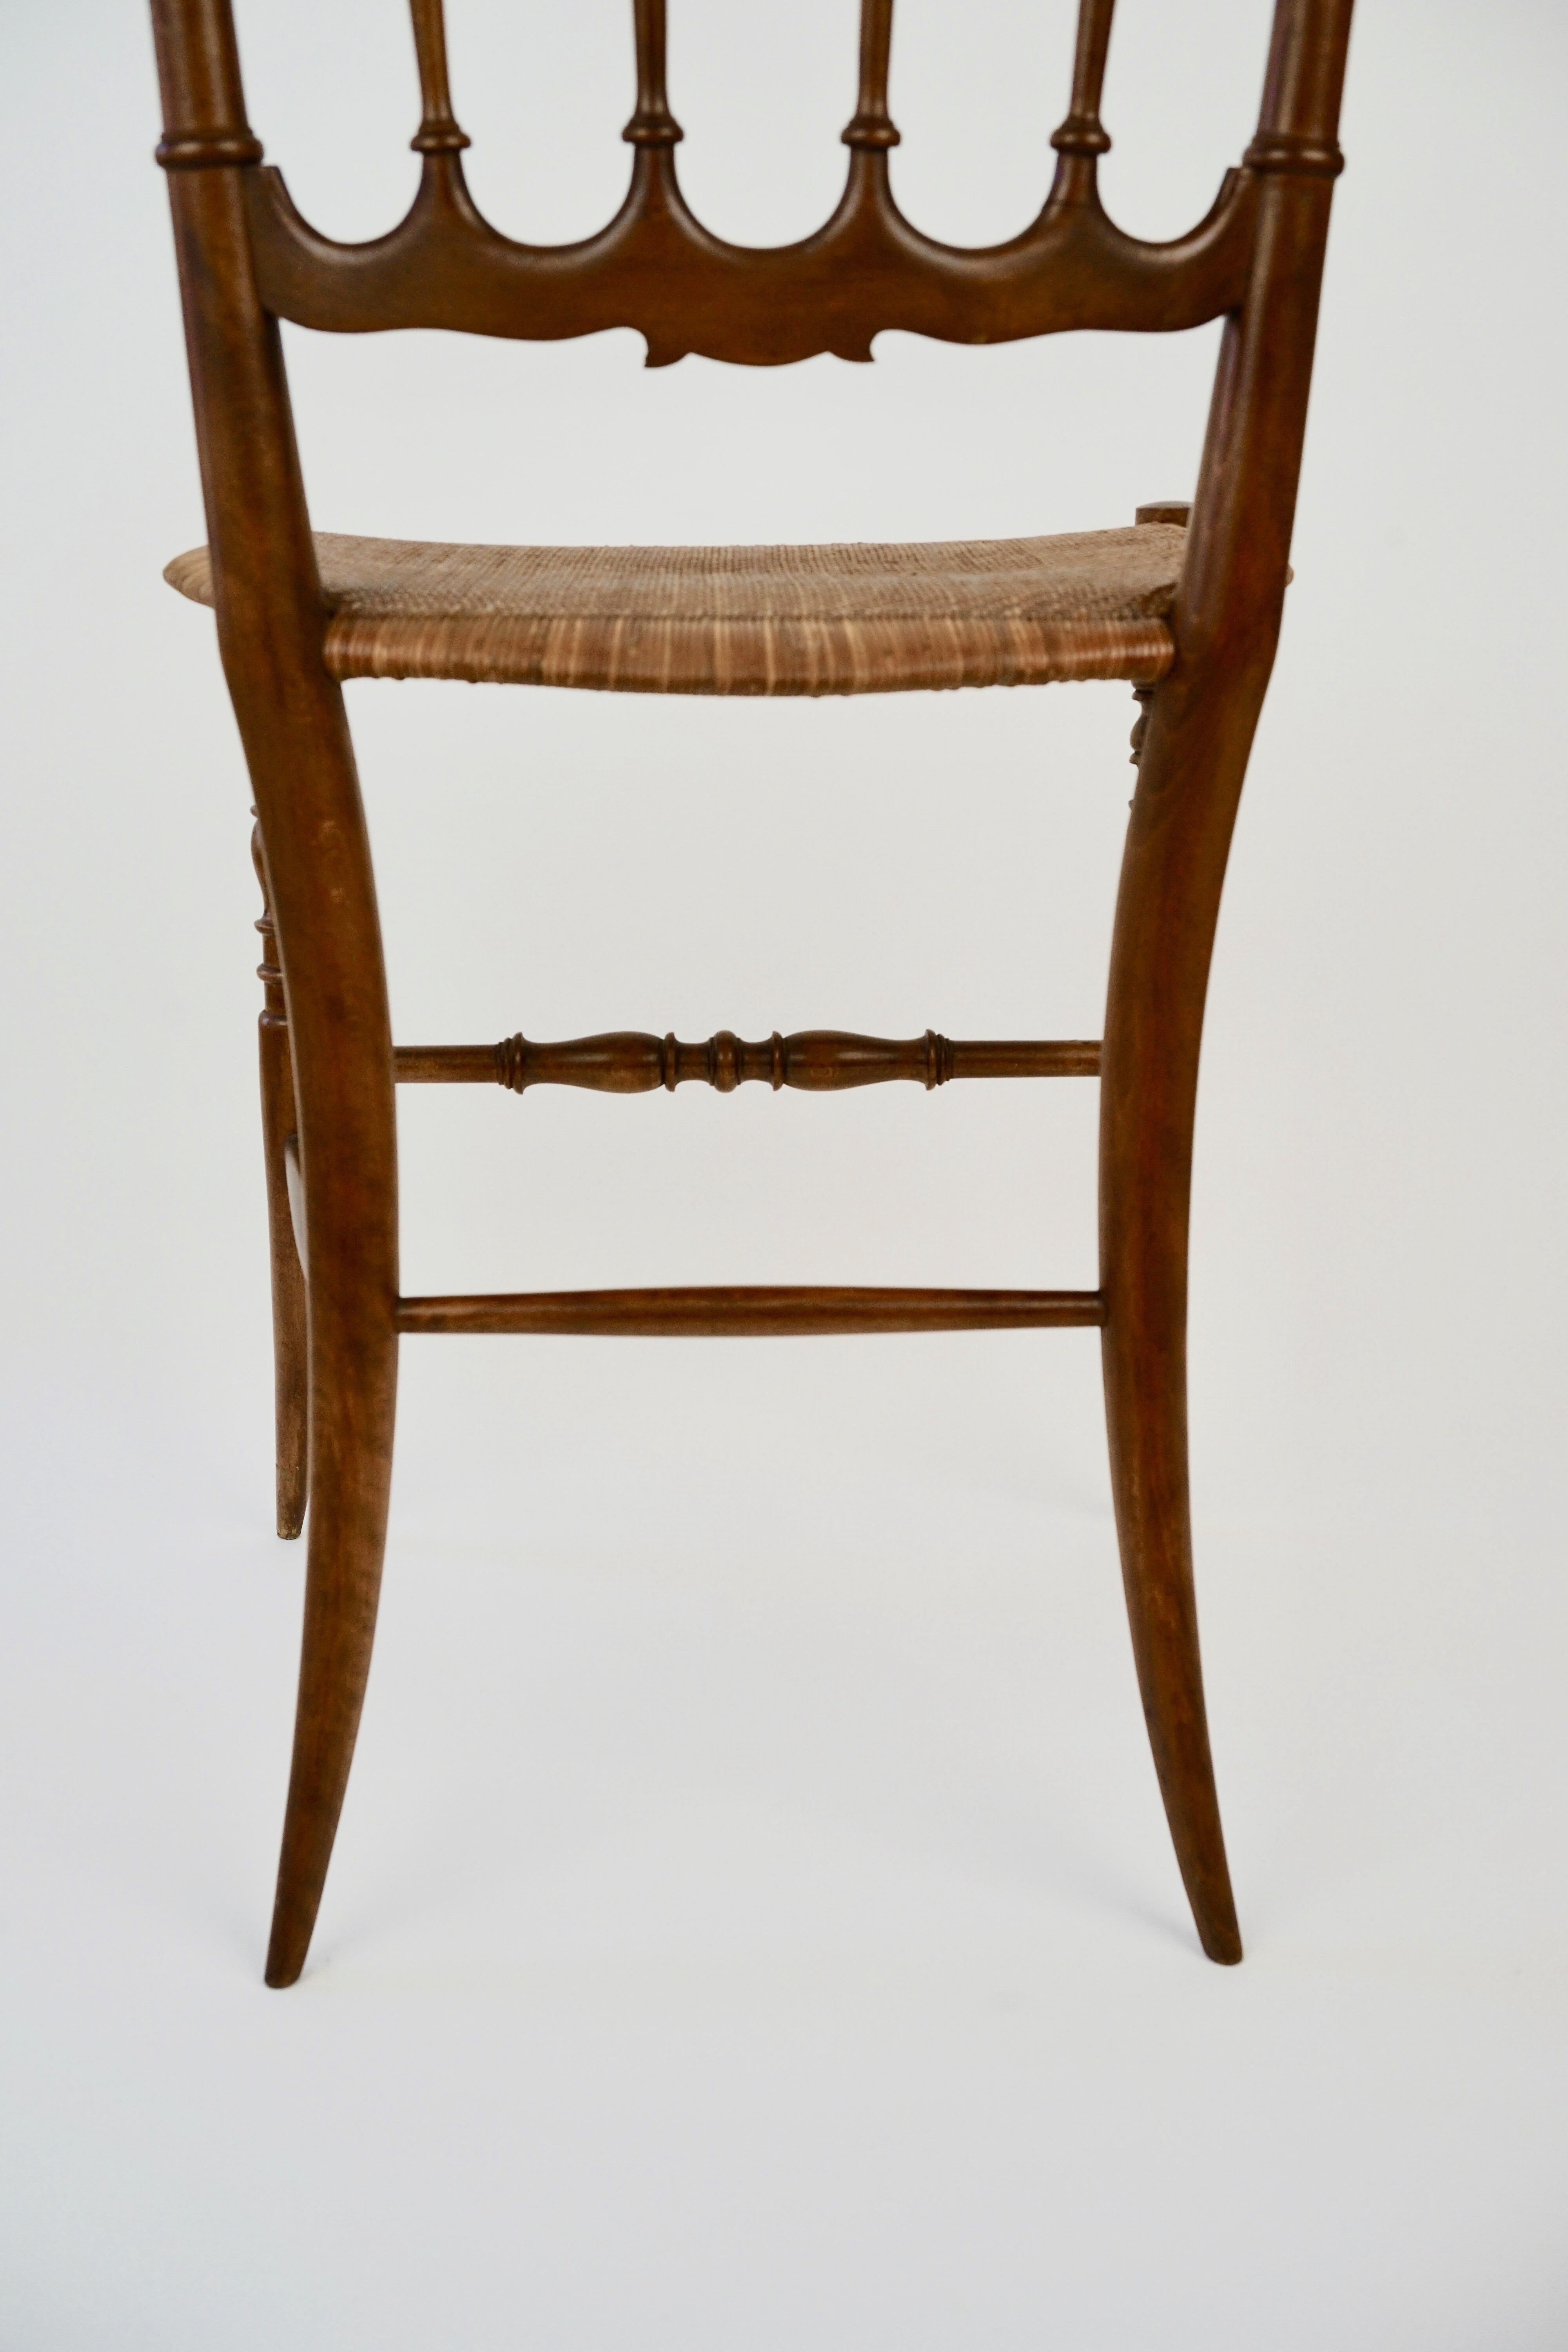 20th Century Mid-Century Chiavari Chair, Model Parisienne, with Cane Seat